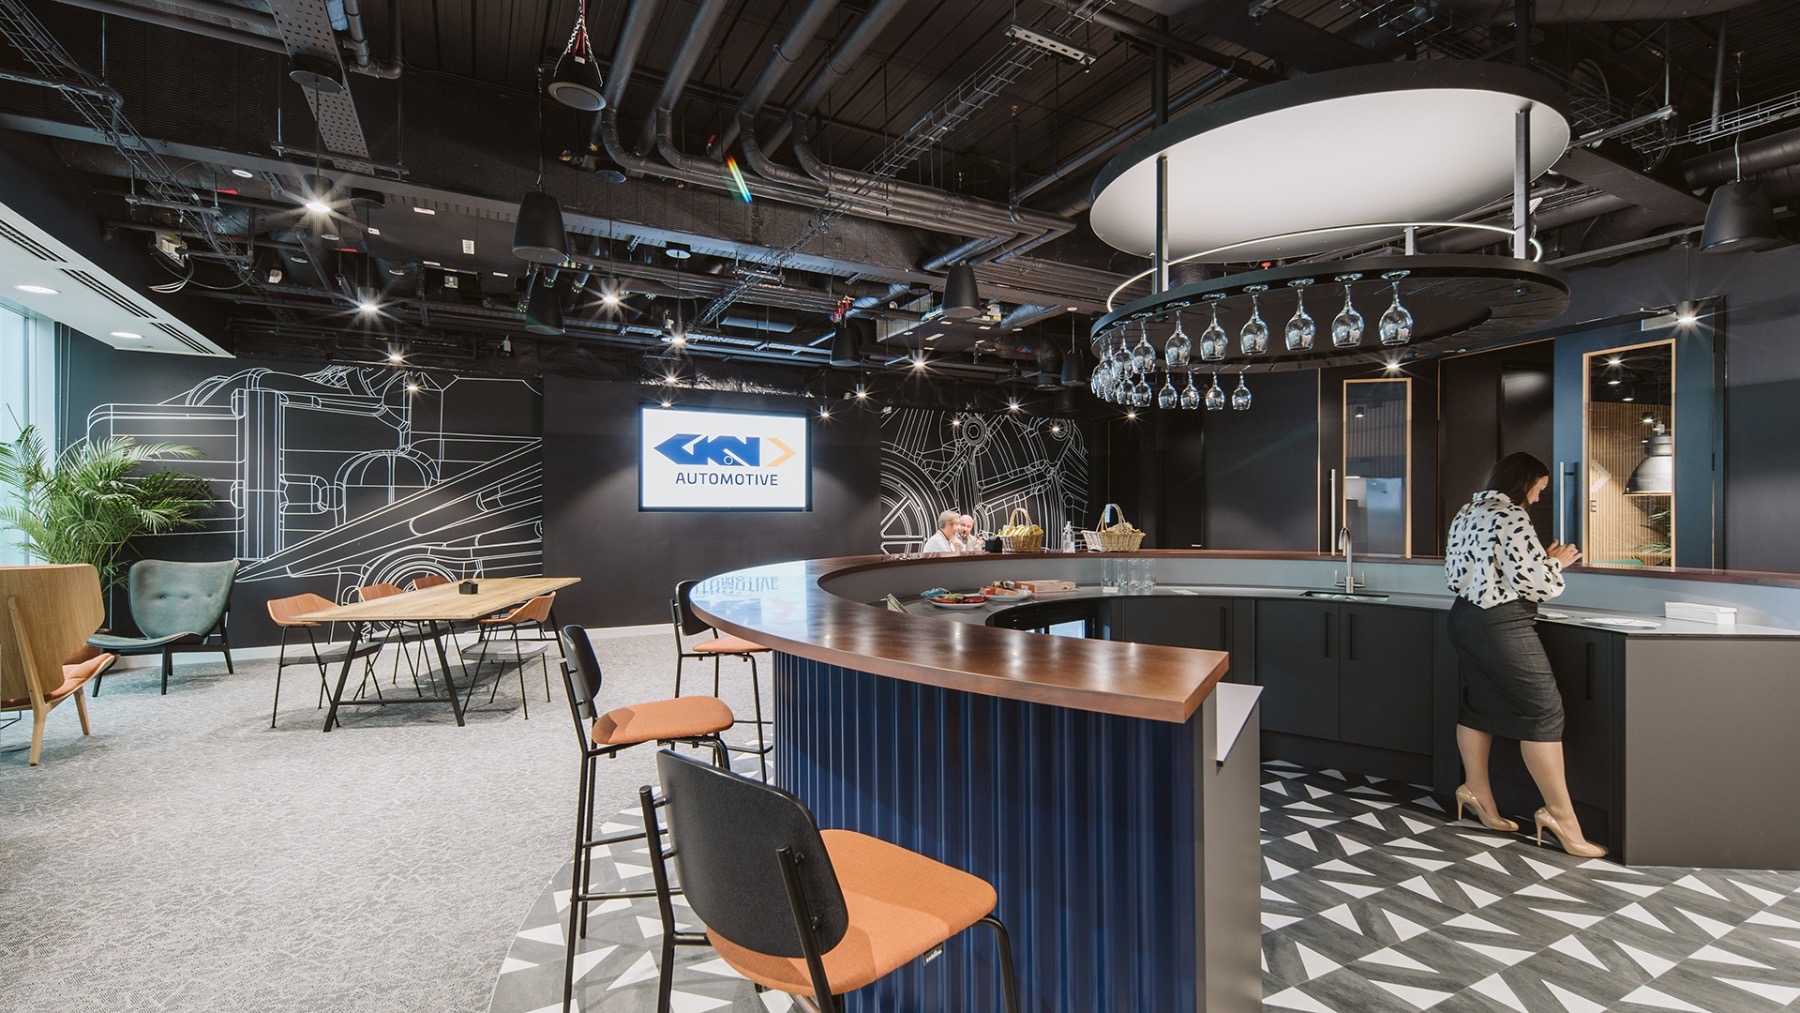 A Look Inside GKN Automotive’s New London Office